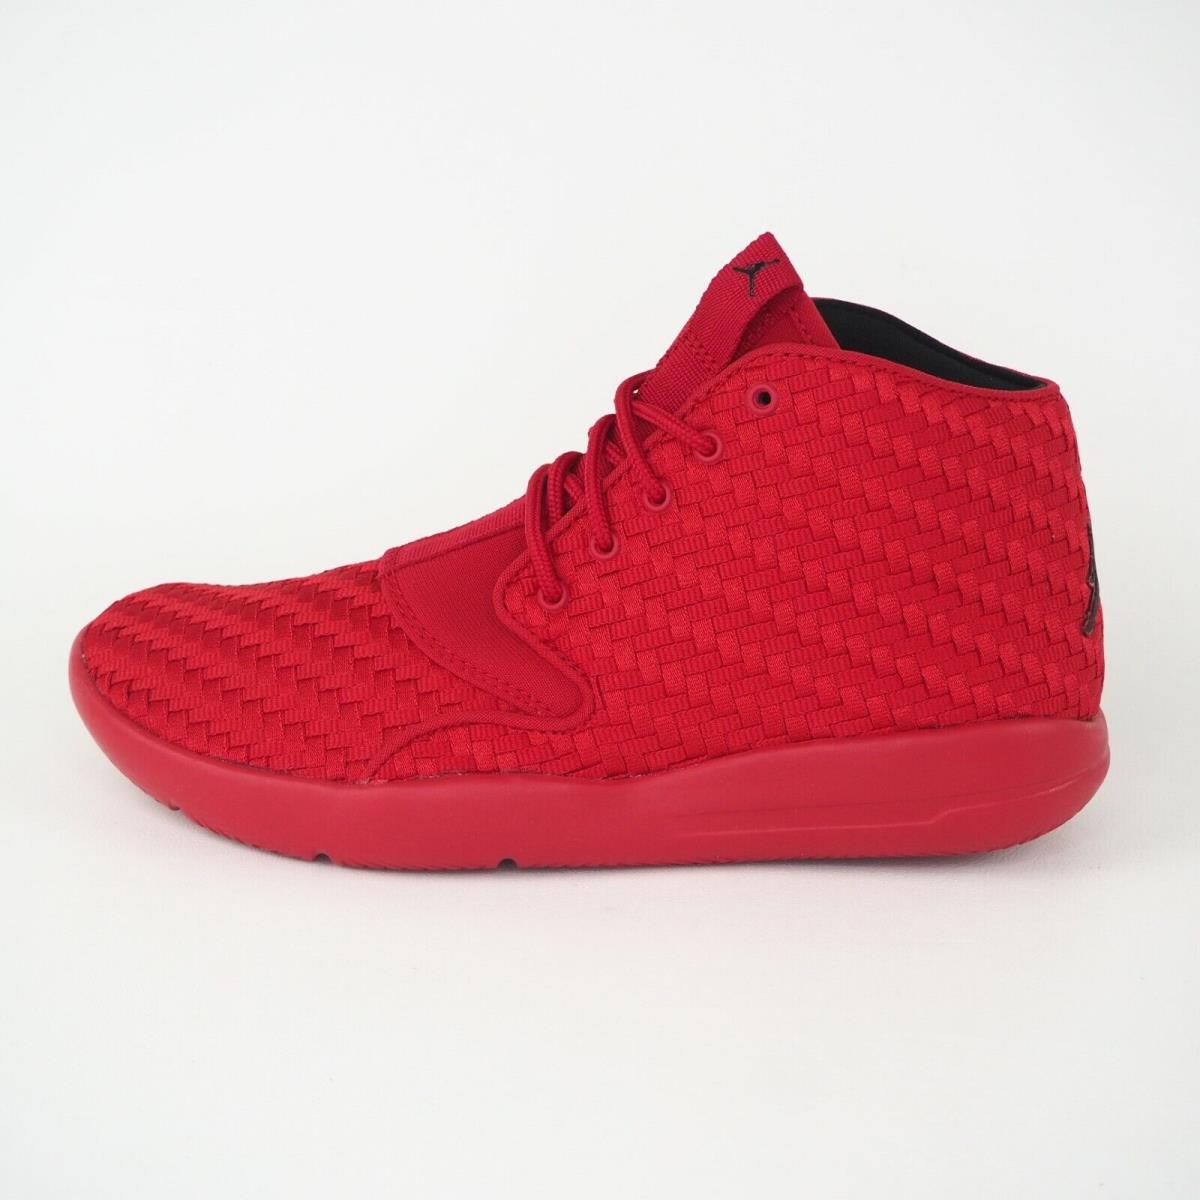 Nike Air Eclipse Chukka Woven BG 881461 601 Boys Shoes Red Basketball ...